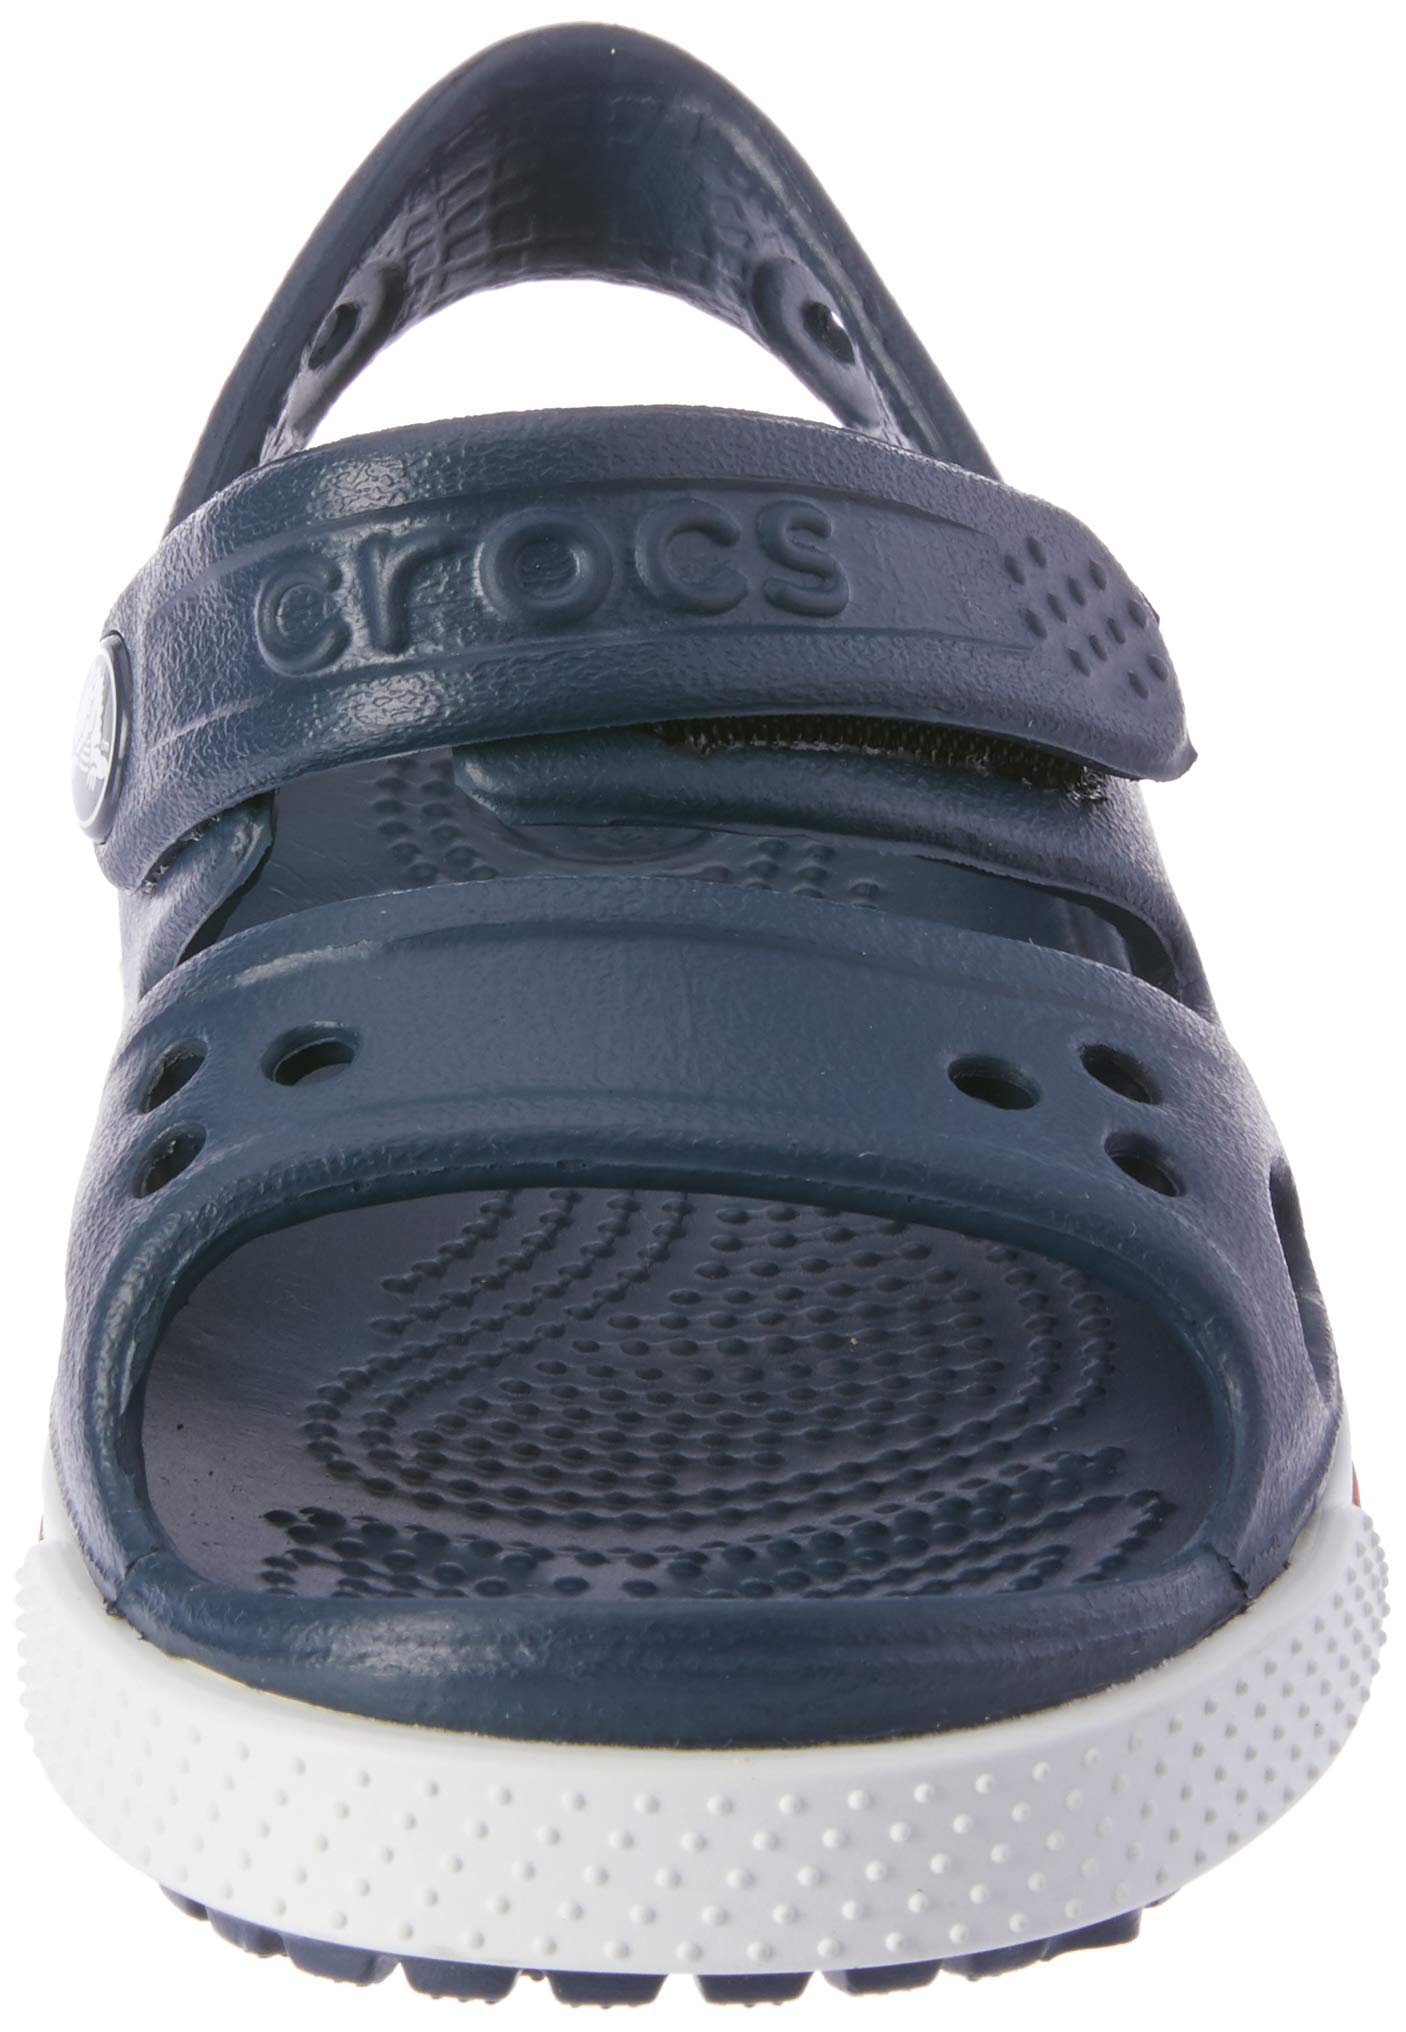 Crocs Kids Crocband Ii Sandal Navy/White Ankle-High - 8M